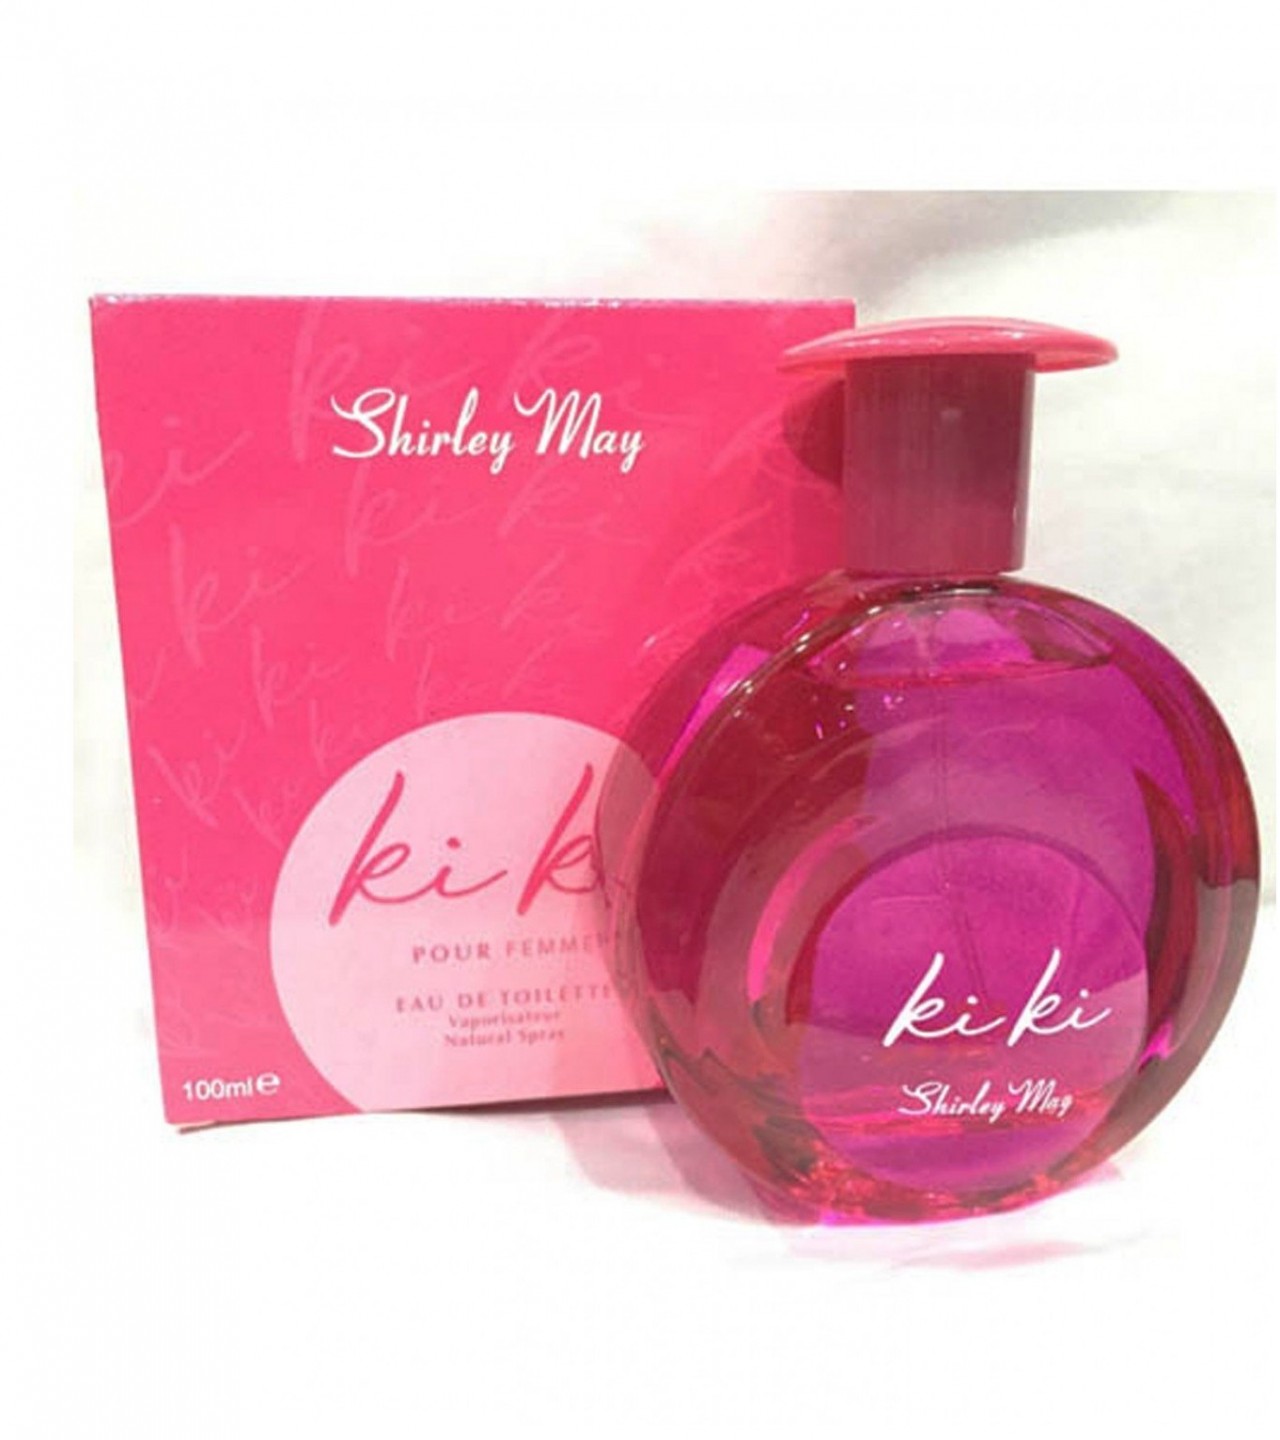 Shirley May kiki Perfume for Women - 100 ml